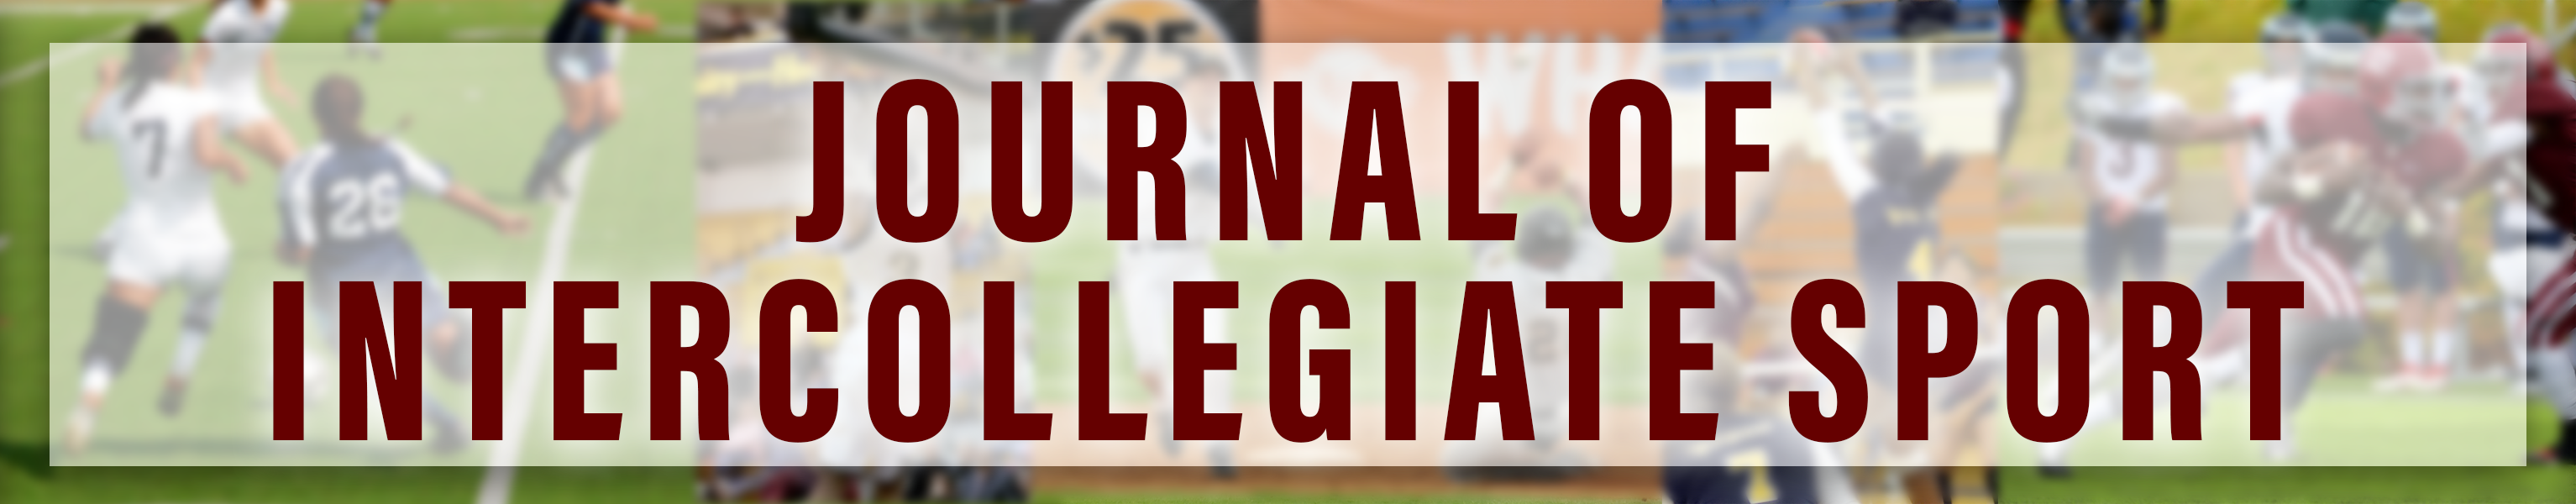 Journal of Intercollegiate Sport